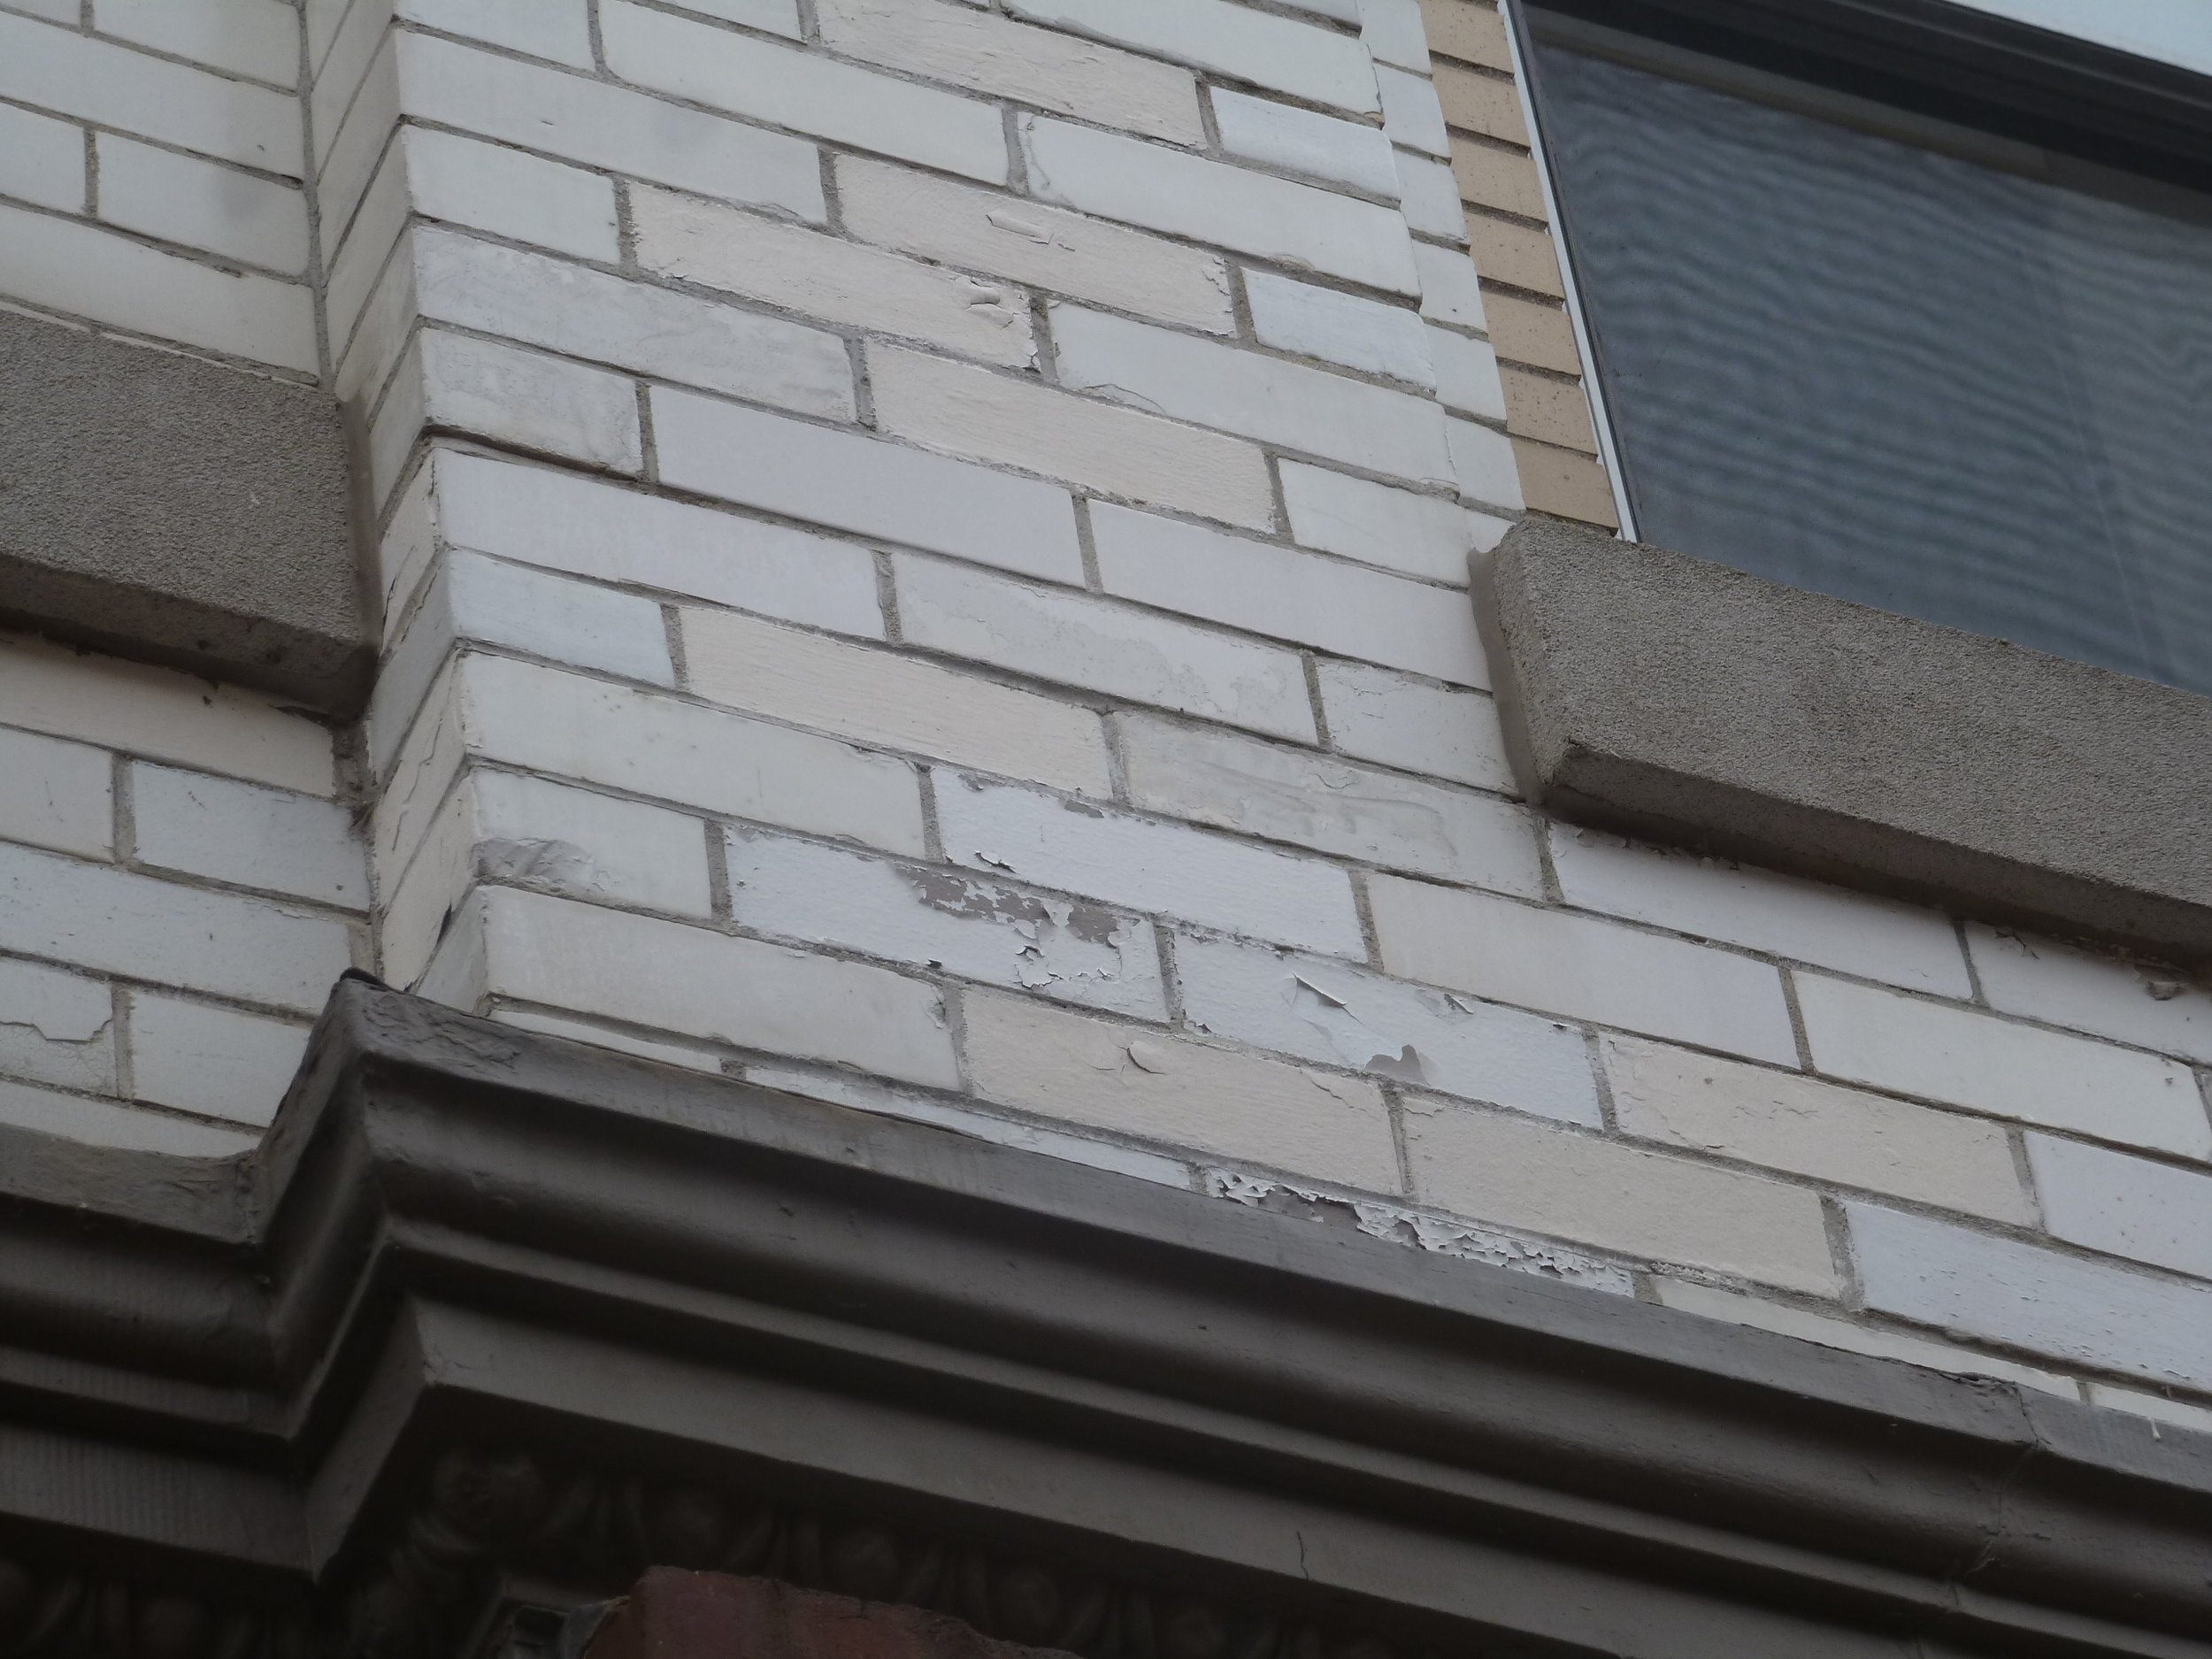 Osgood Building Masonry Detail_129 Lisbon Street_Lewiston_ME_Geoff Melhuish_5_31_2016.JPG